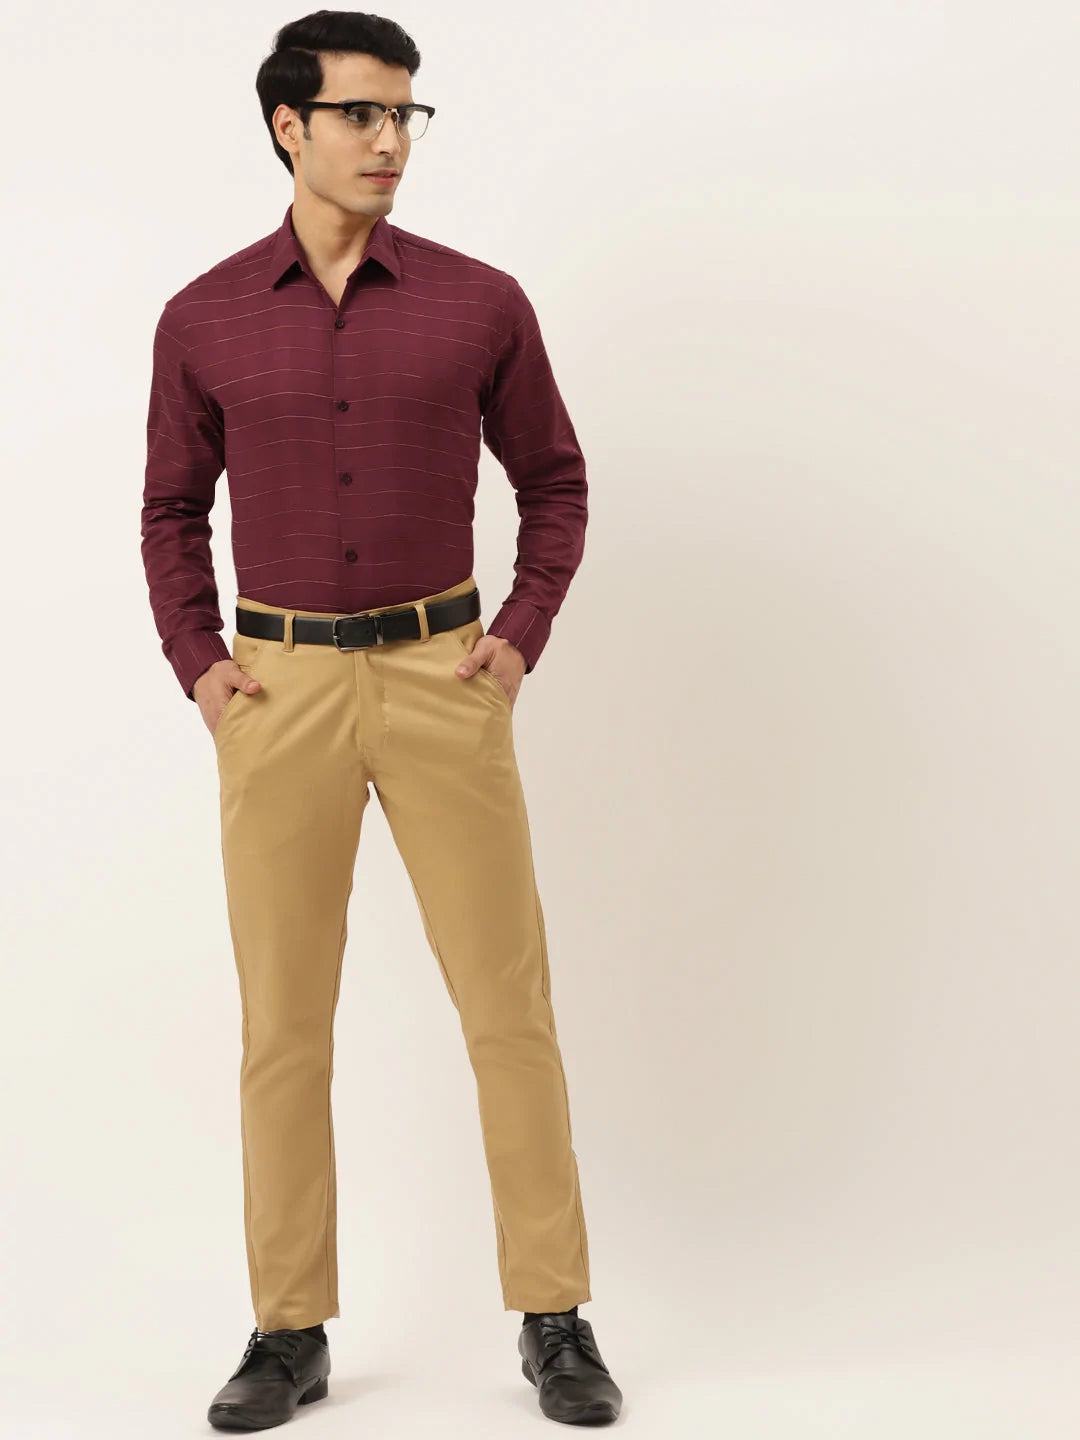 Jainish Men's Formal Cotton Horizontal Striped Shirt ( SF 790Maroon )